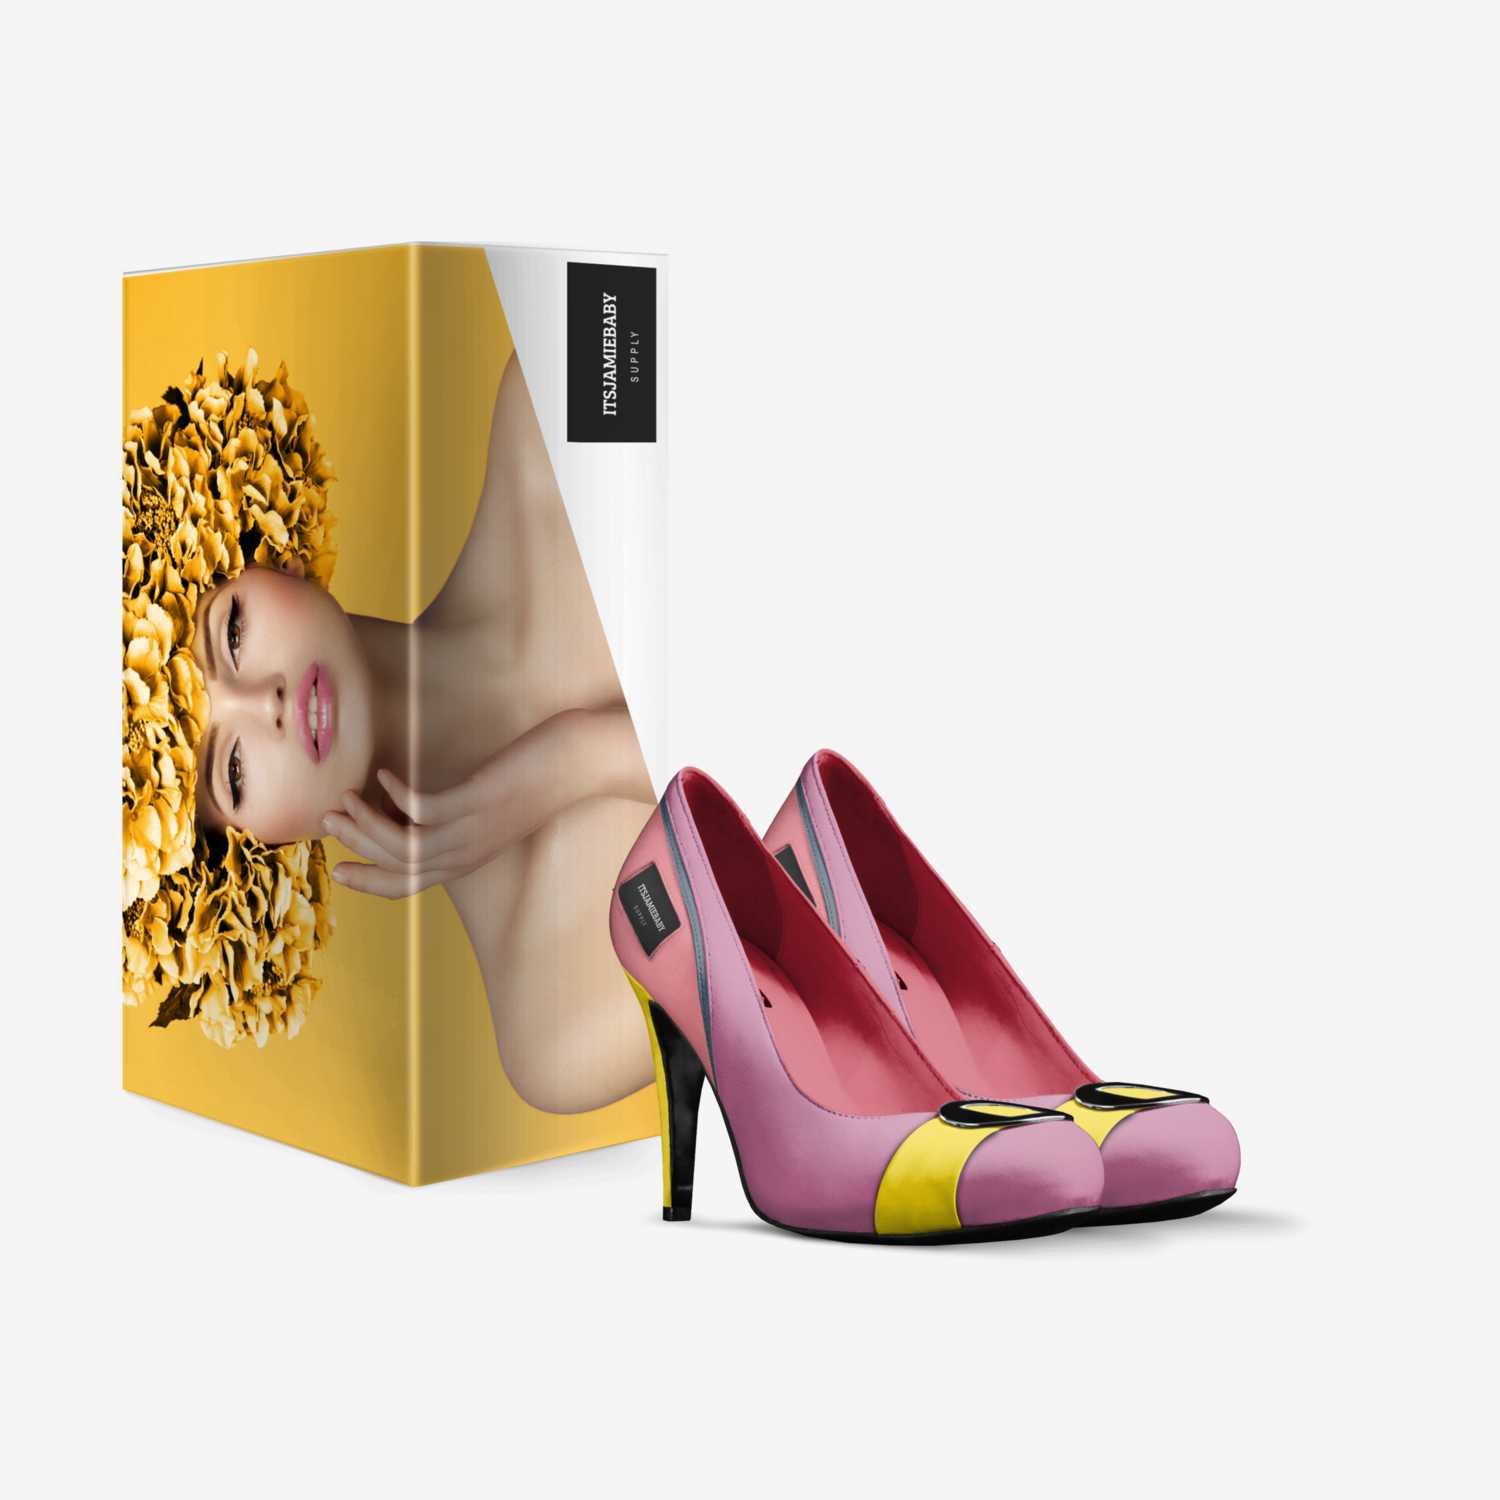 ITSJAMIEBABY custom made in Italy shoes by Jamie Wilkinson | Box view